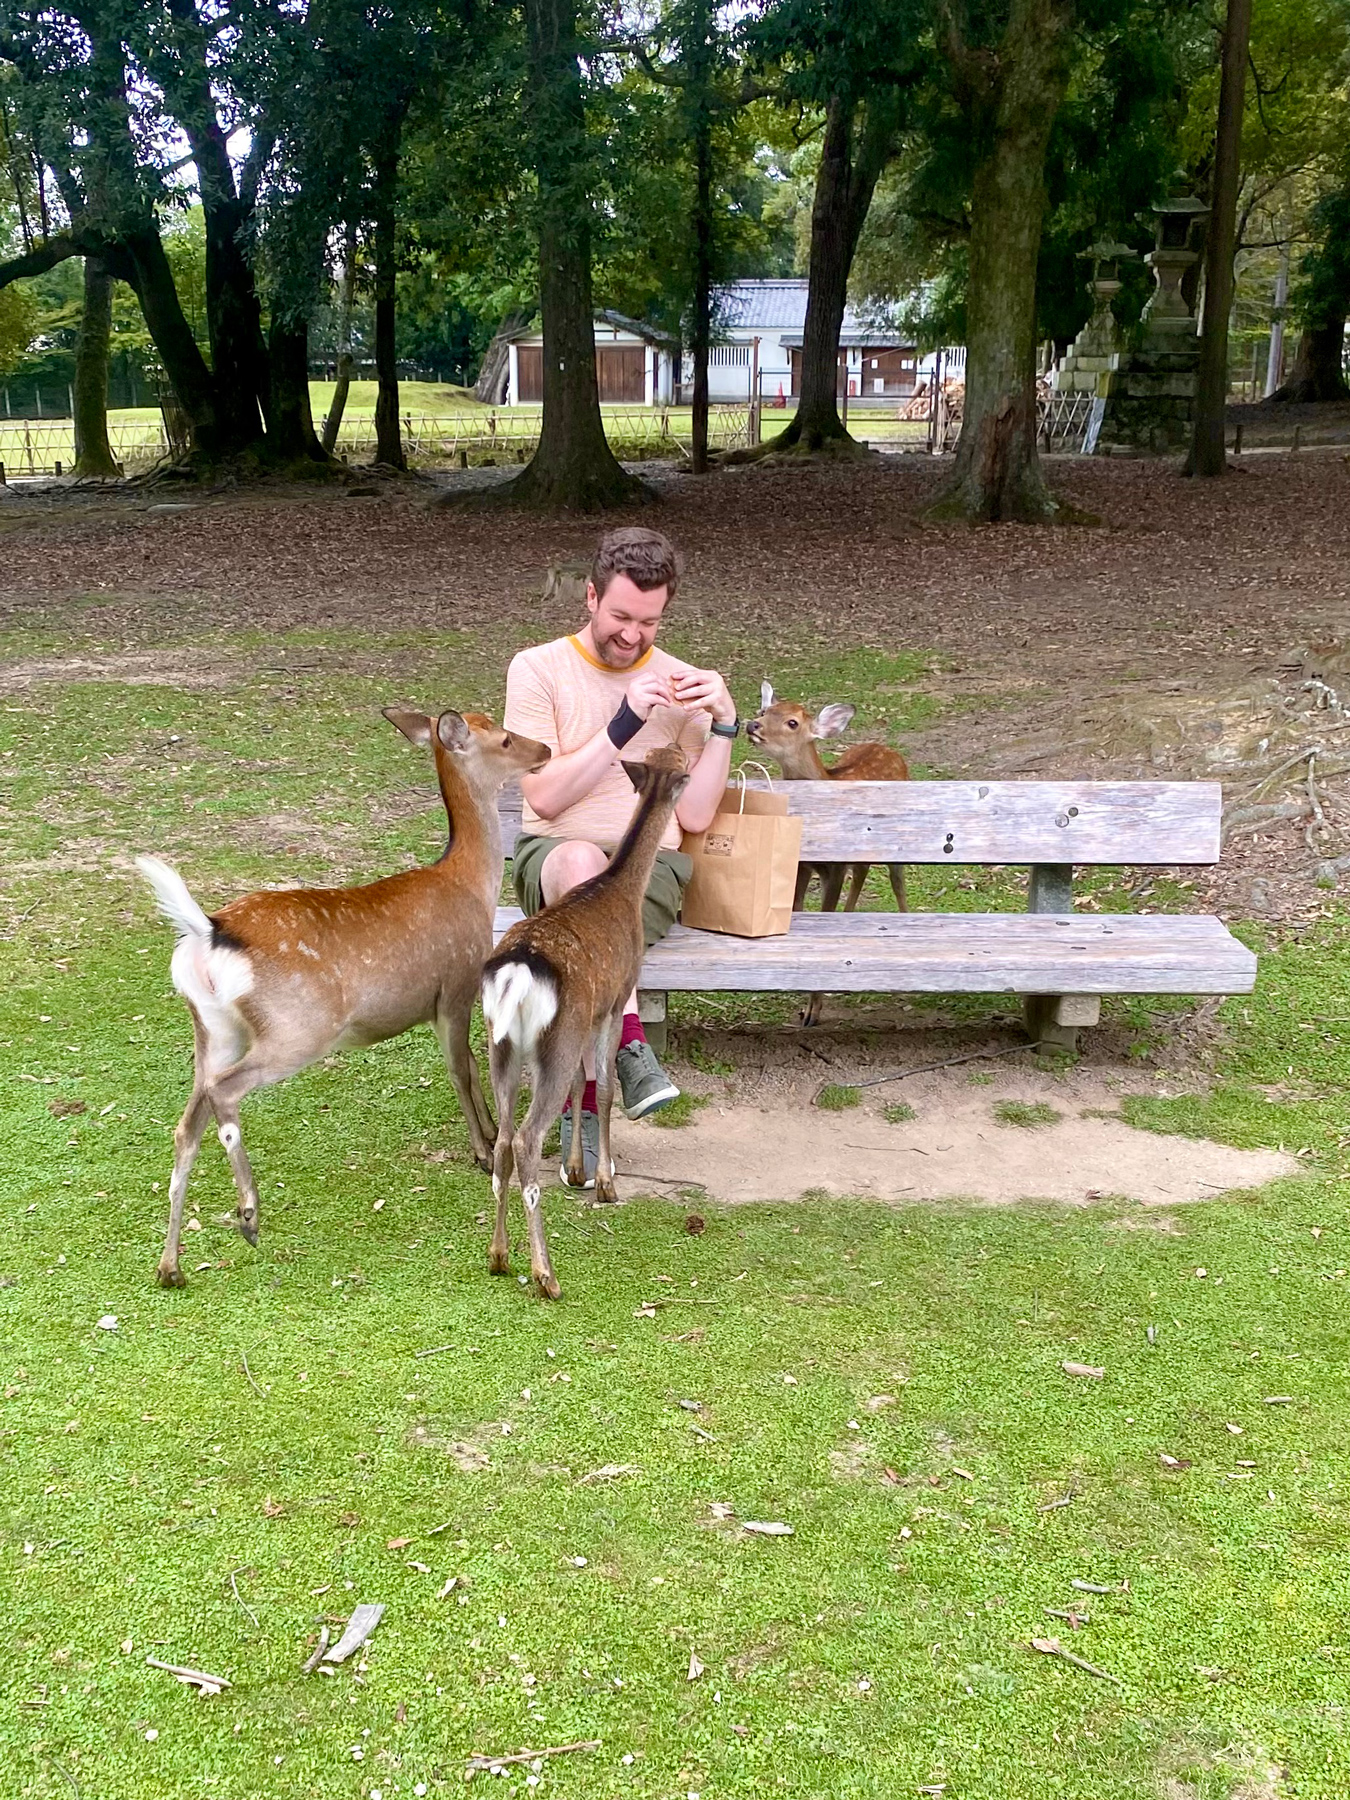 Me sat on a bench feeding three deer